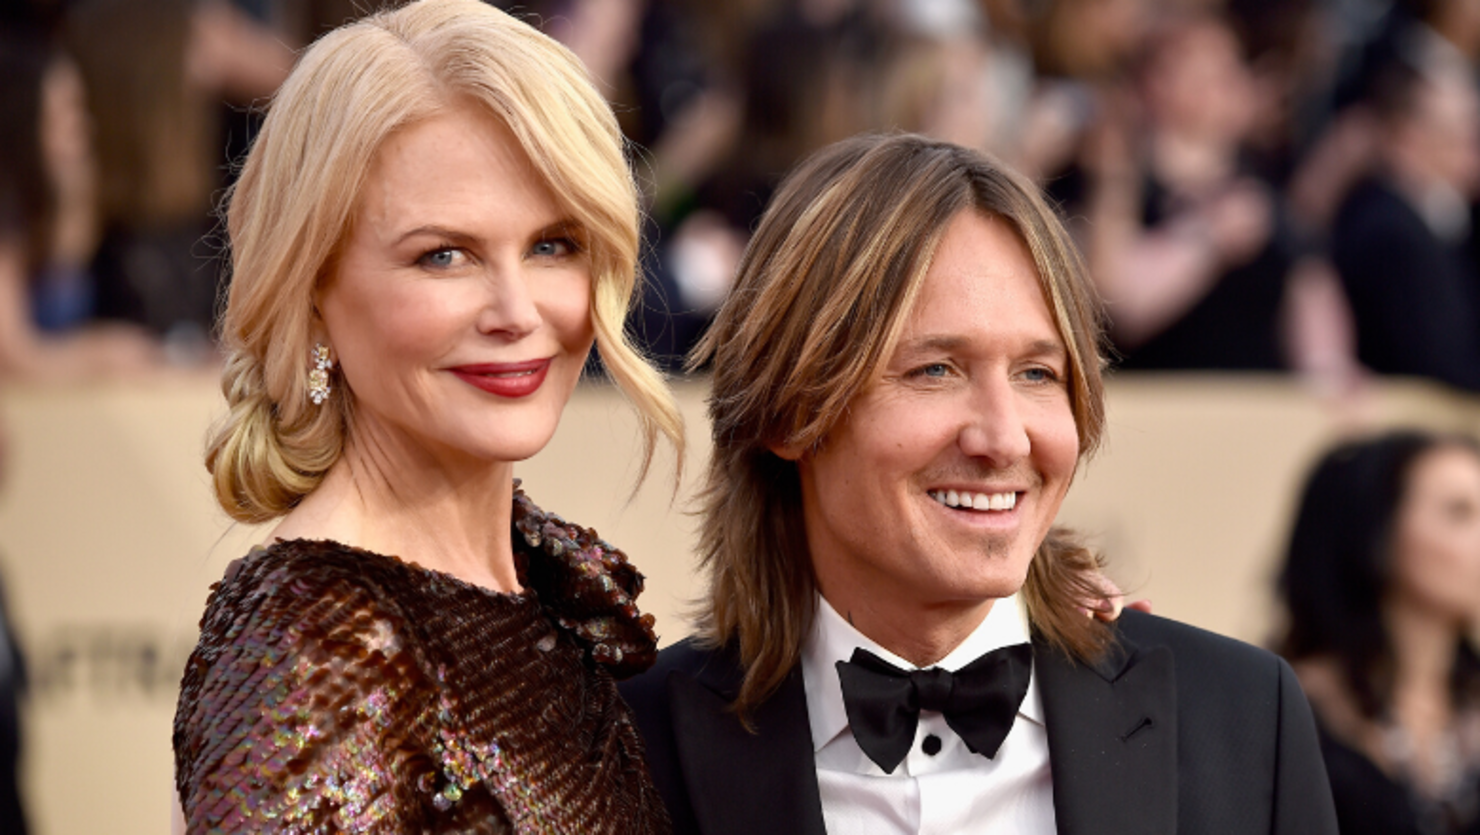 Keith Urban Says He 'Definitely Married Up' With Nicole Kidman